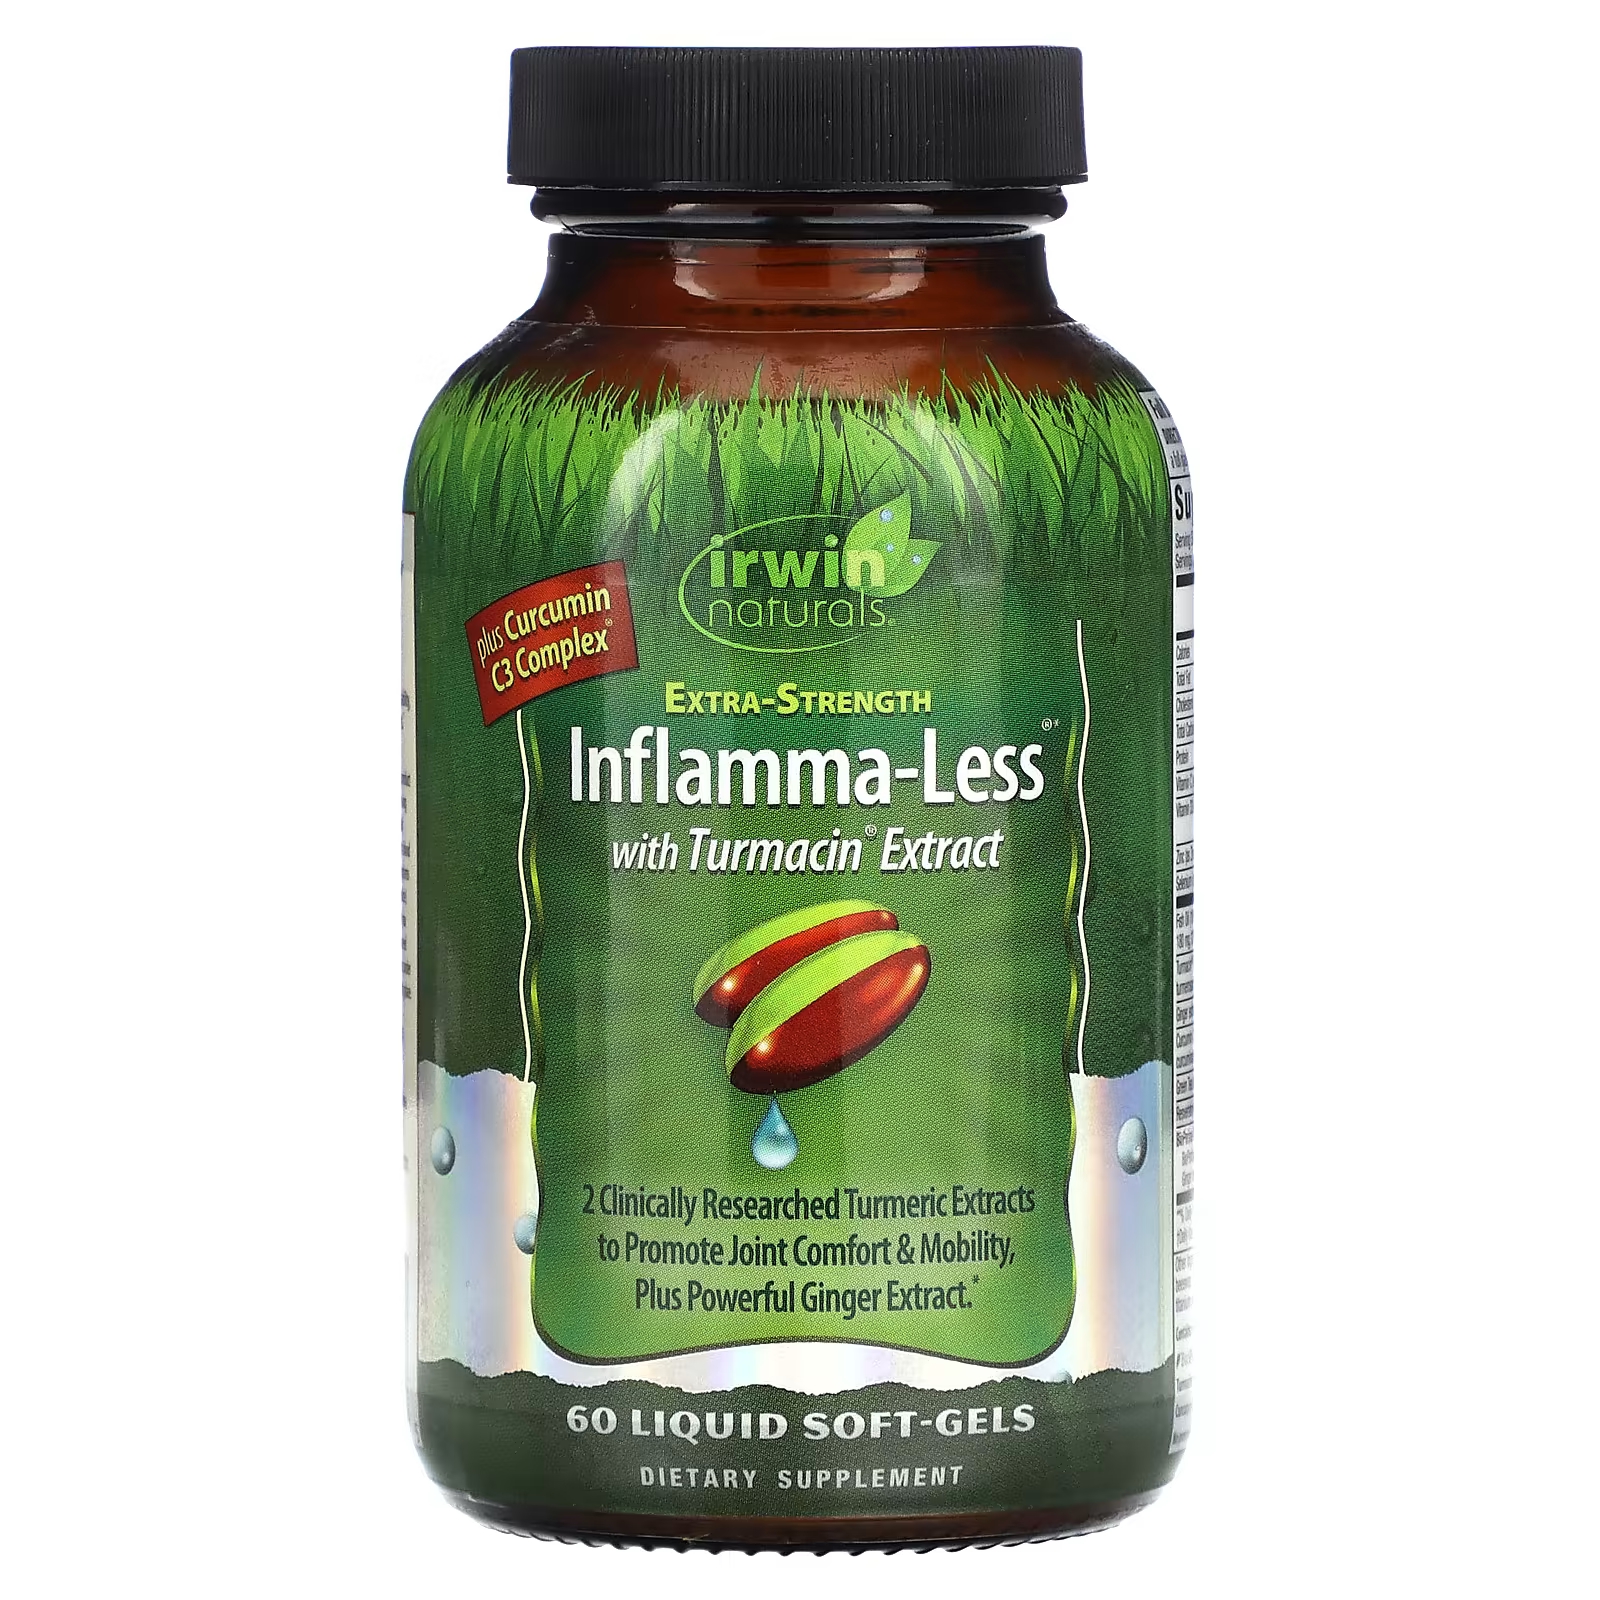 Пищевая добавка Irwin Naturals Inflamma-Less с экстрактом турмацина, 60 жидких капсул пищевая добавка irwin naturals для волос 60 капсул